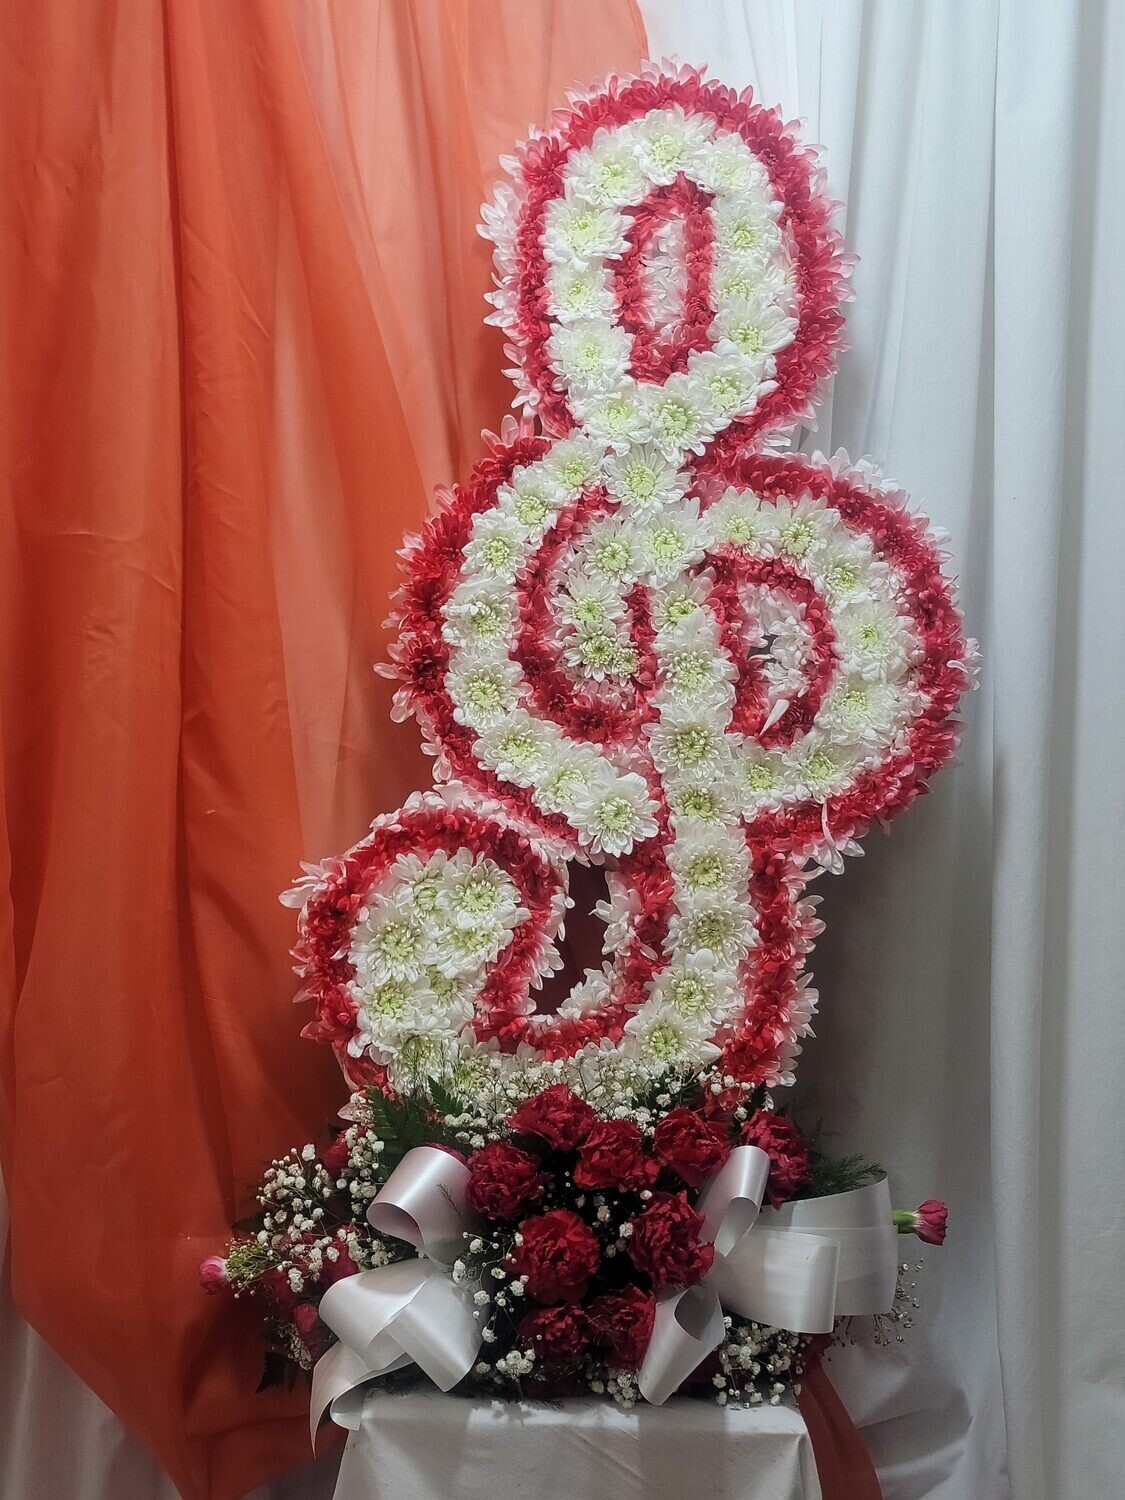 Music Note wreath